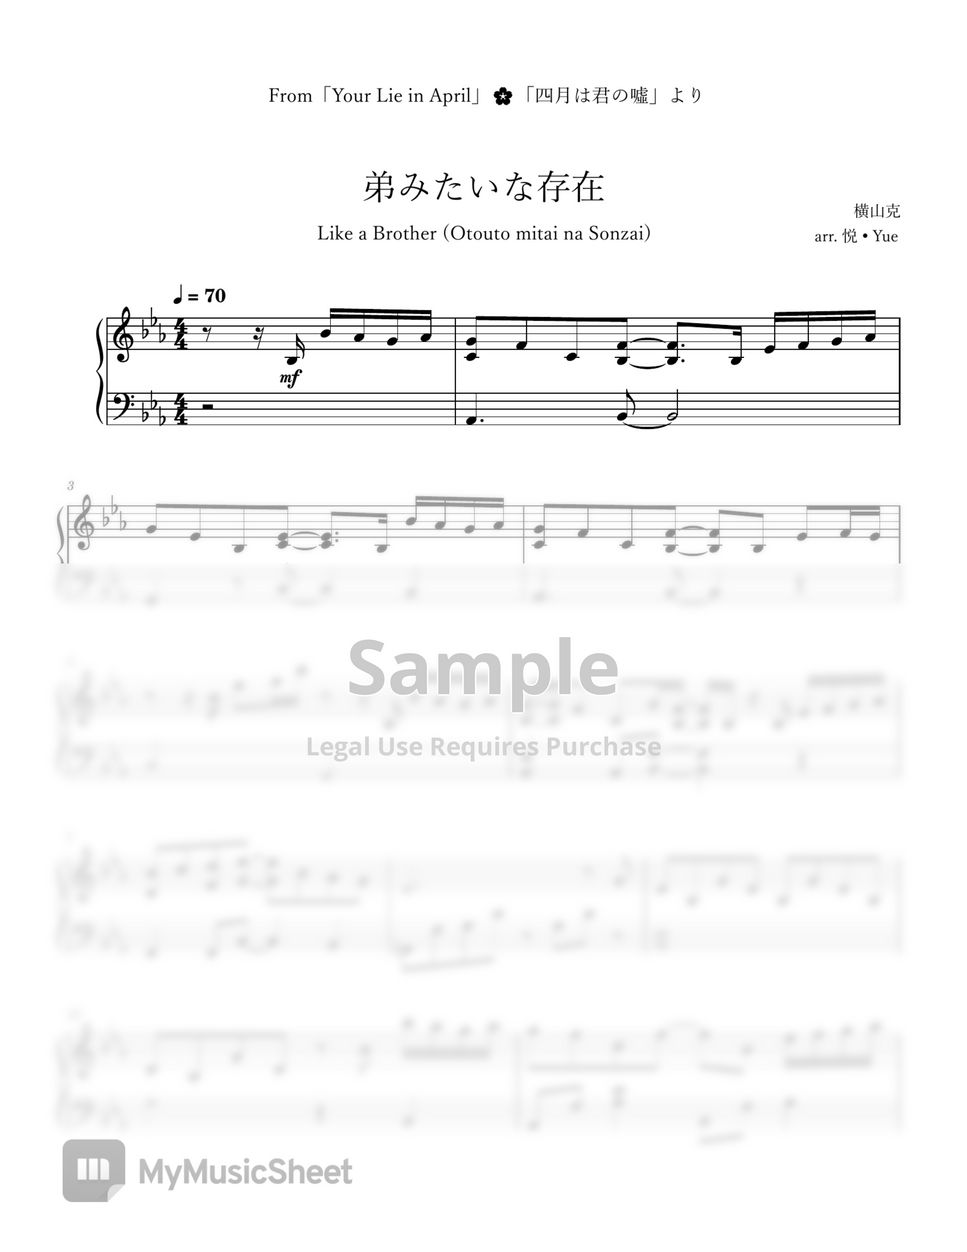 Masaru Yokoyama - Your Lie in April「Like a Brother」(Otouto Mitai na Sonzai) Piano by 悦 • Yue